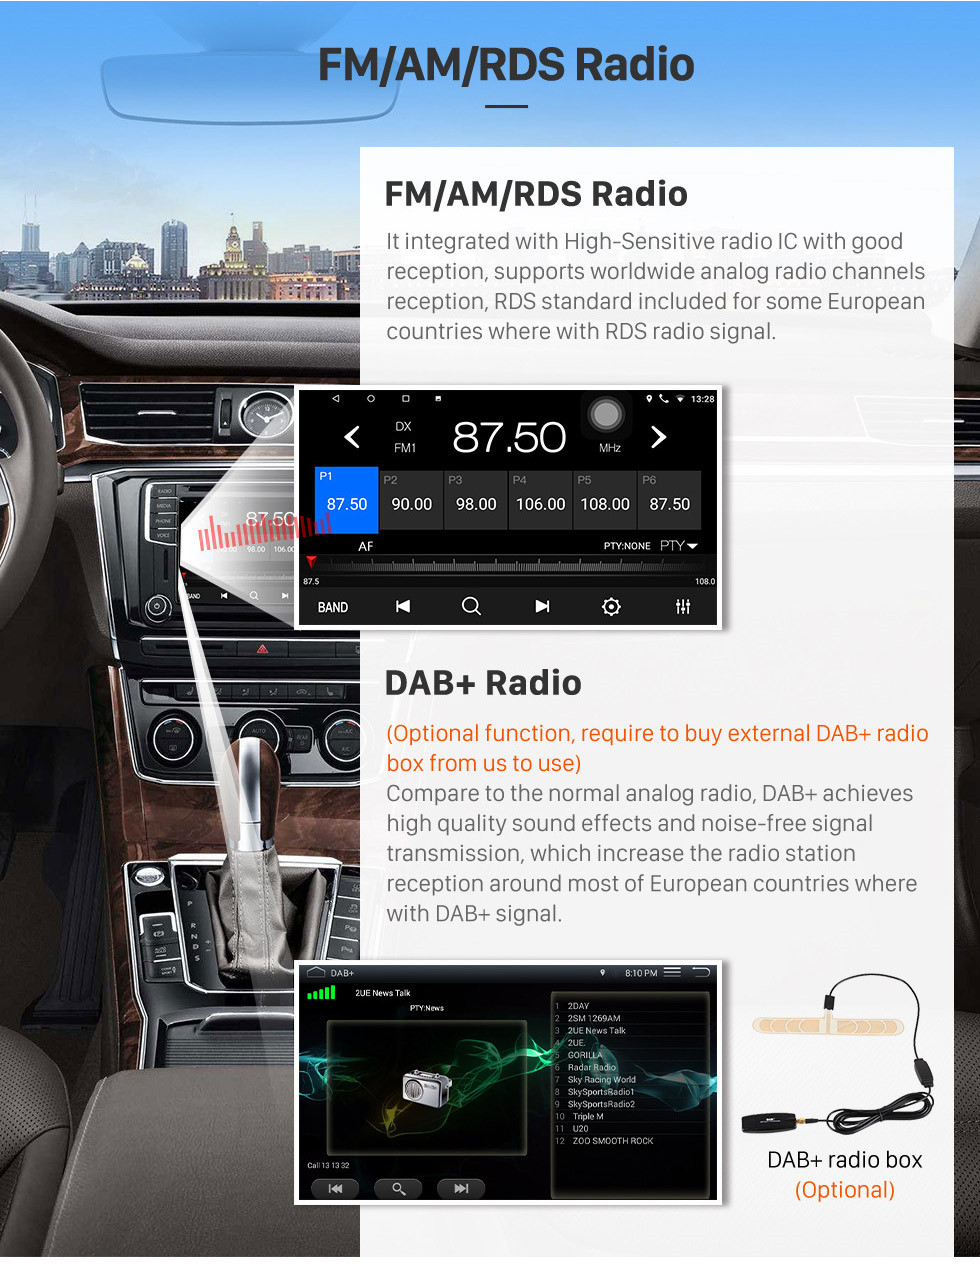 Seicane OEM 9 pulgadas Android 10.0 Radio para 2011-2014 Kia K5 RHD Bluetooth HD Pantalla táctil Soporte de navegación GPS Carplay Cámara trasera